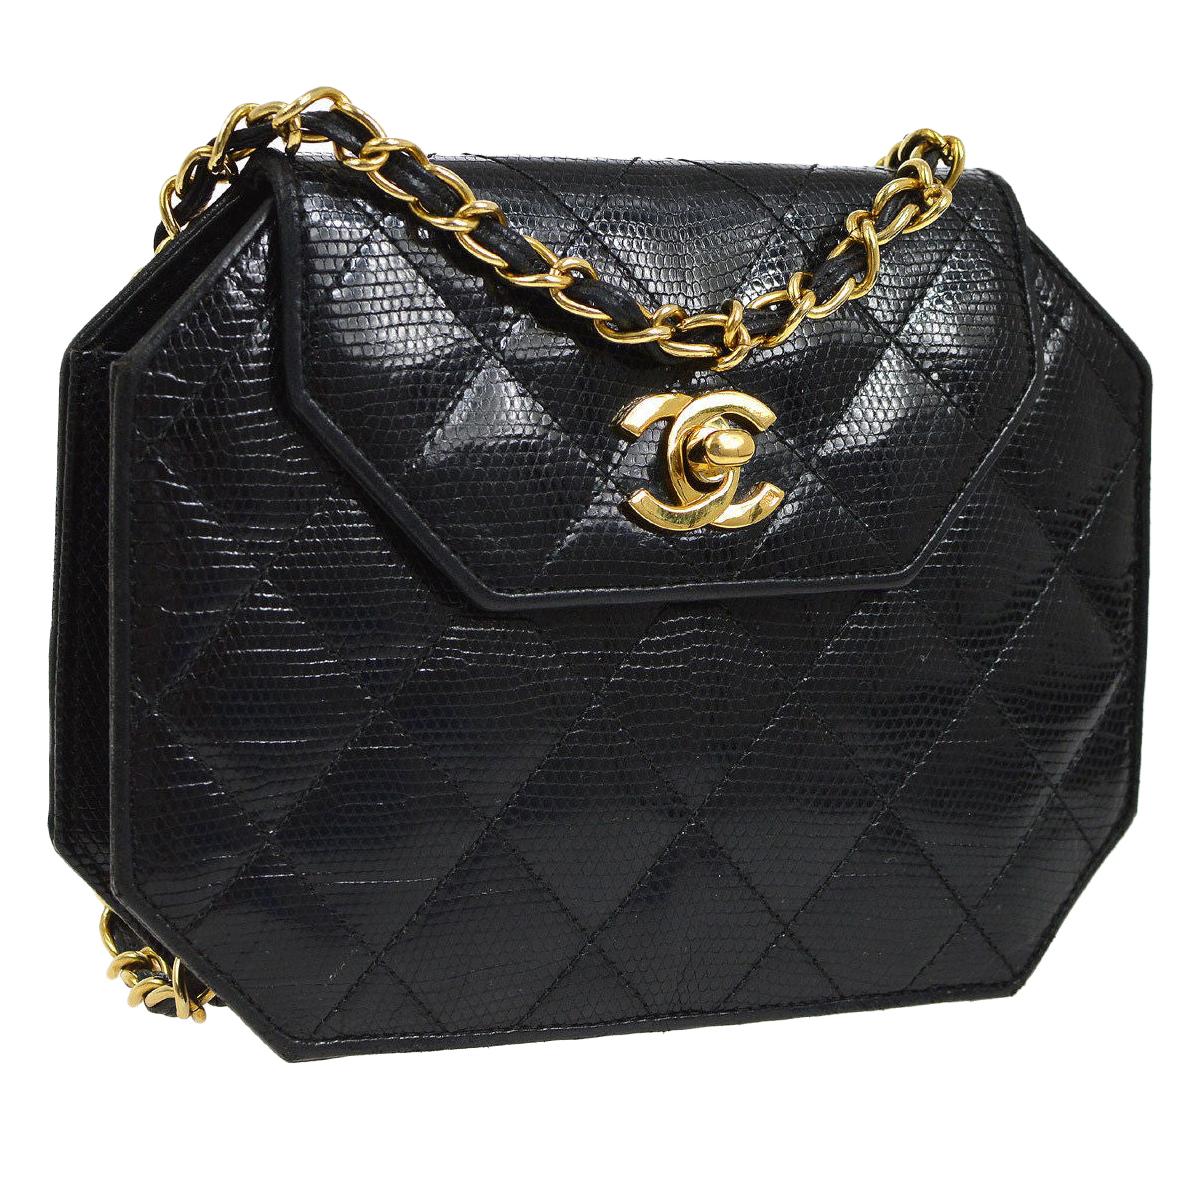 Chanel Black Lizard Exotic Skin Leather Small Evening Clutch Shoulder Flap Bag